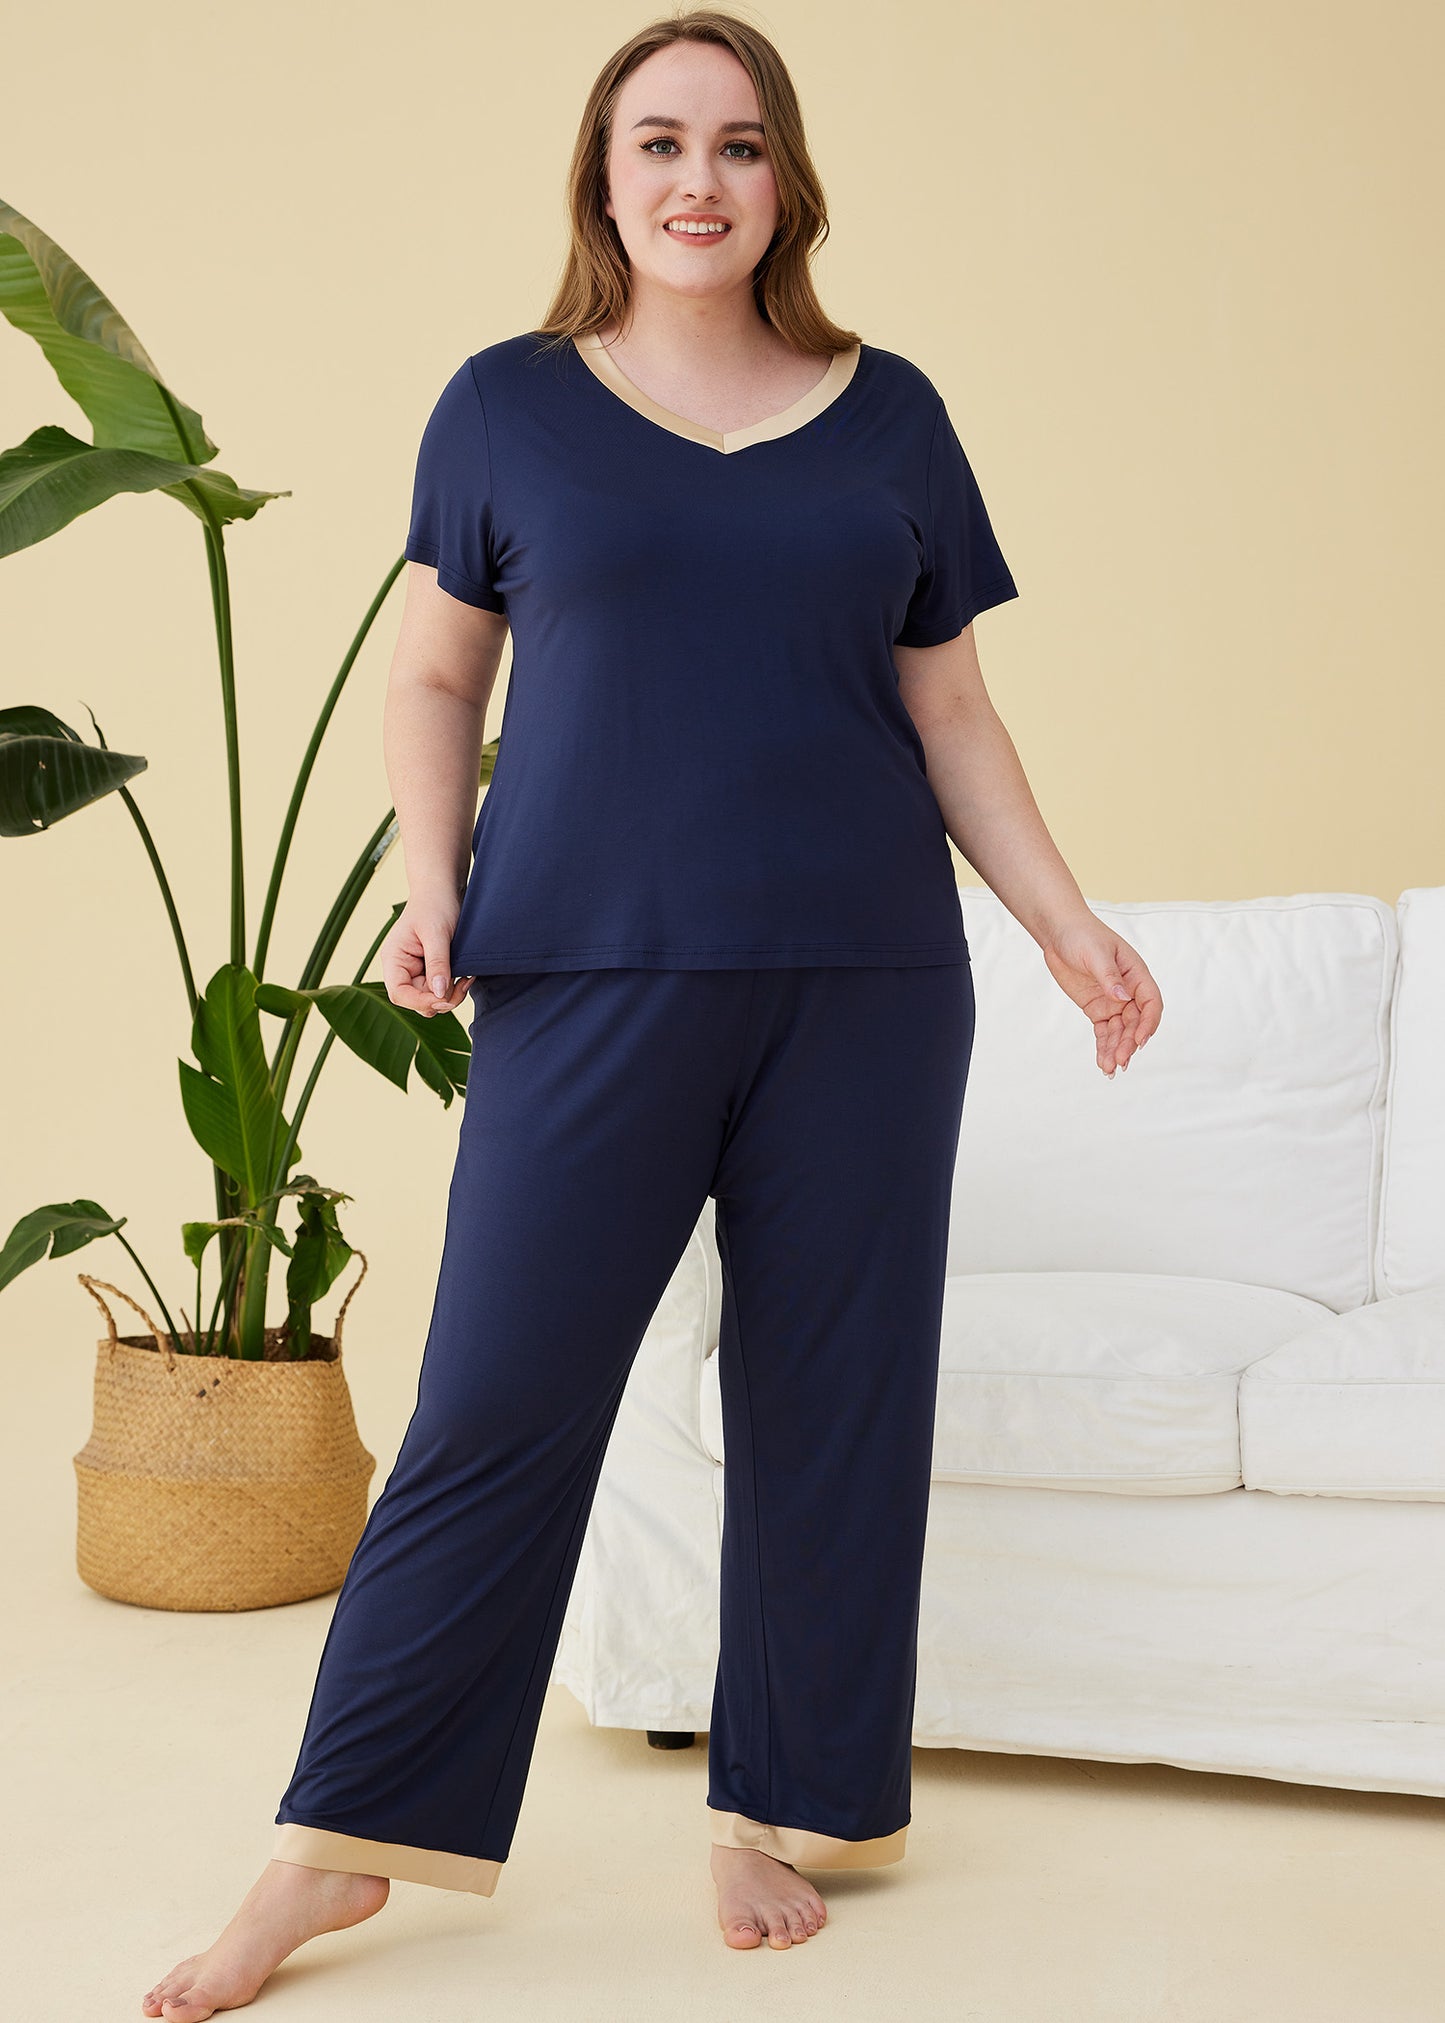 Women's Bamboo Sleepwear Short Sleeves Top with Pants Pajama Set